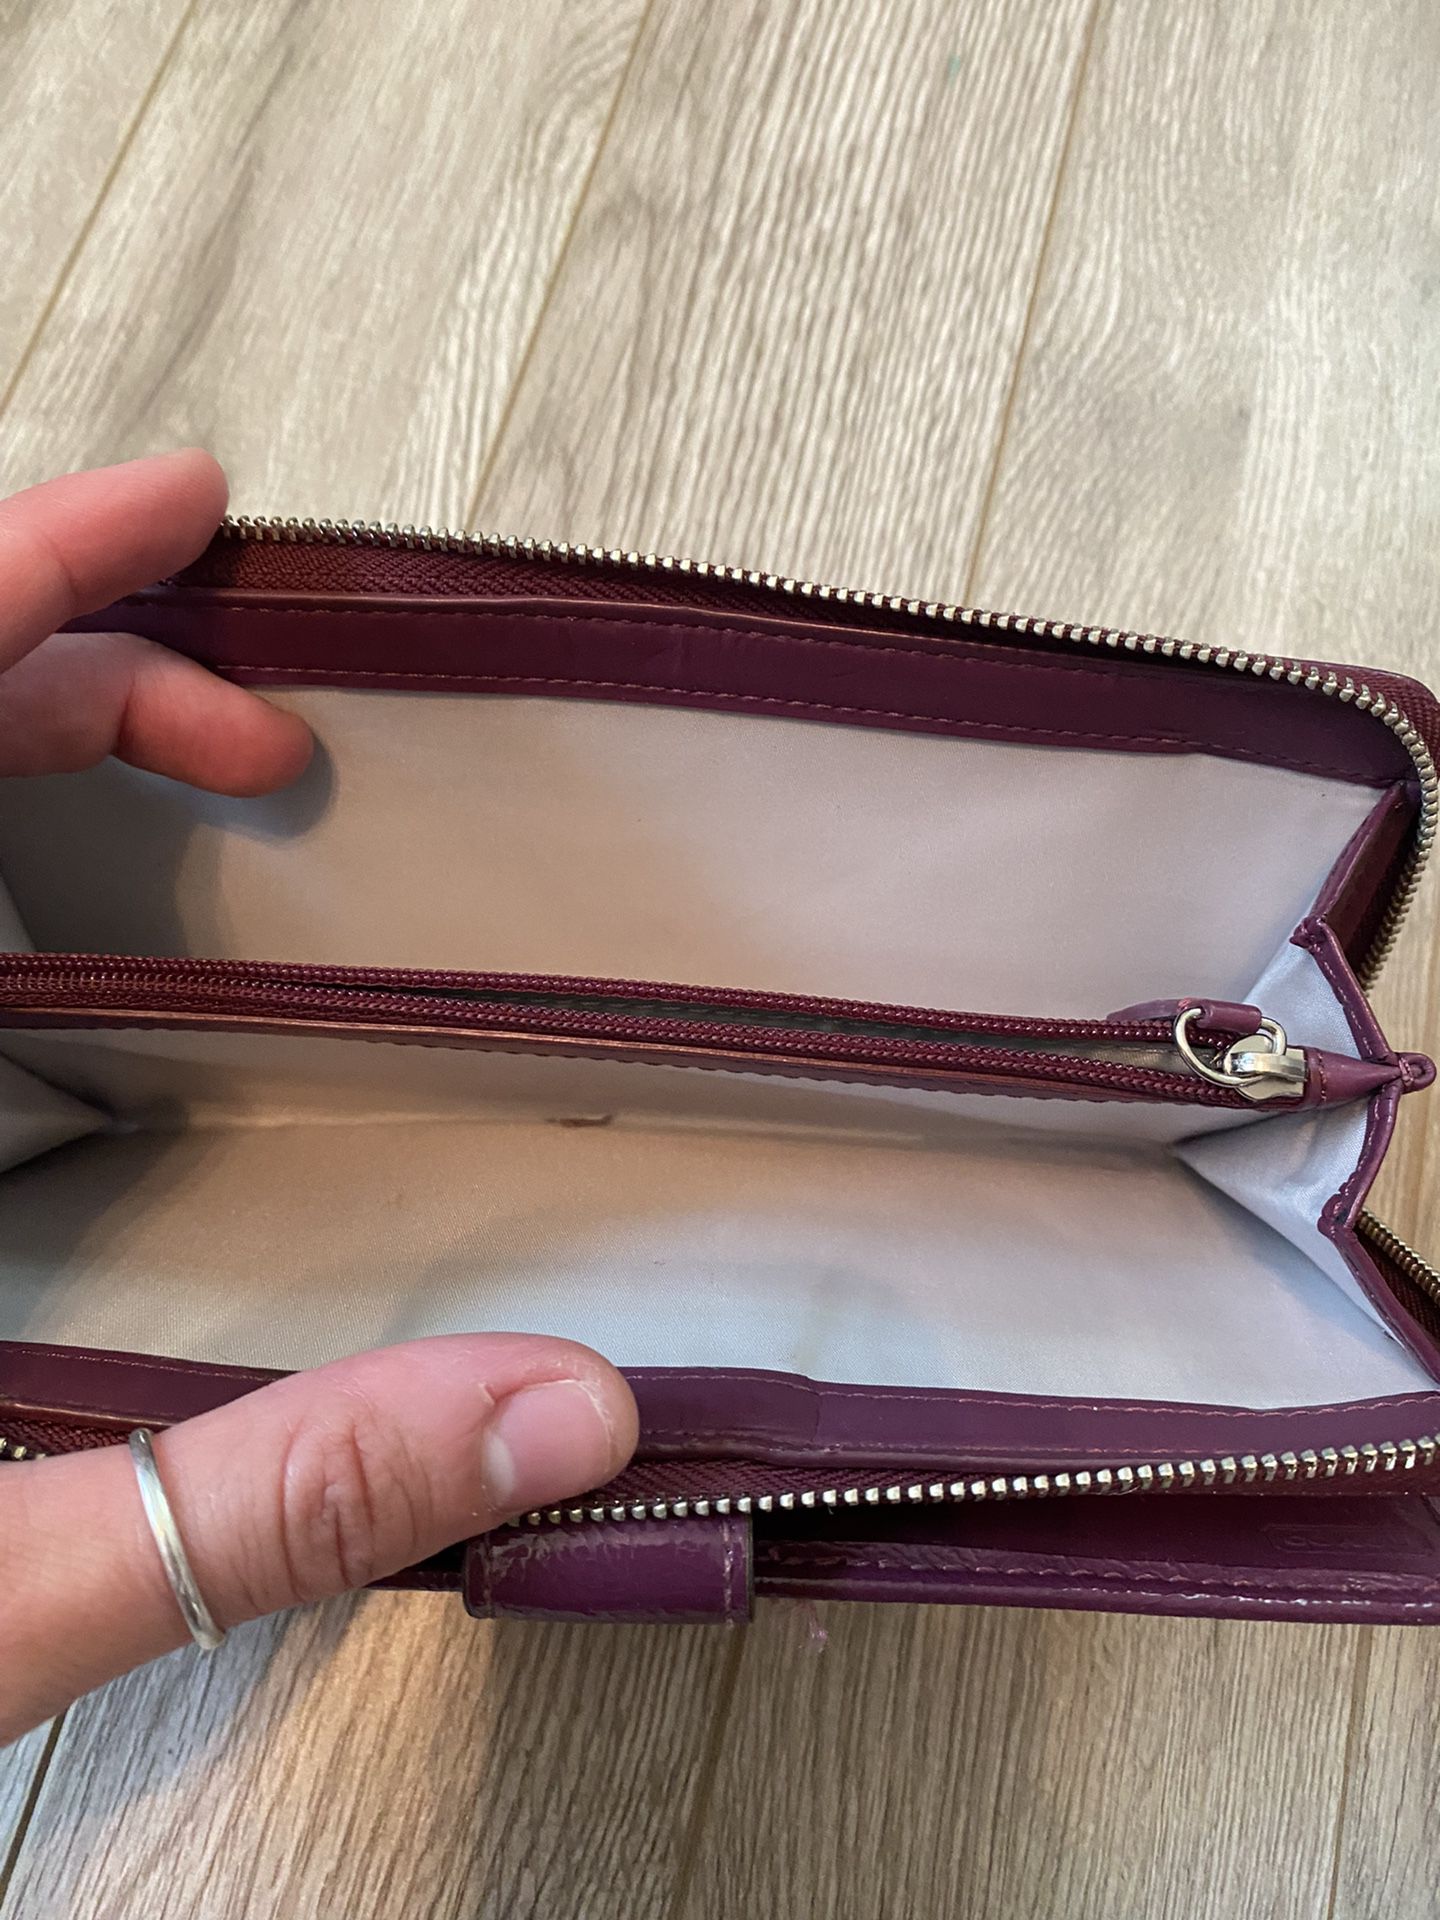 Purple Coach Leather Wallet